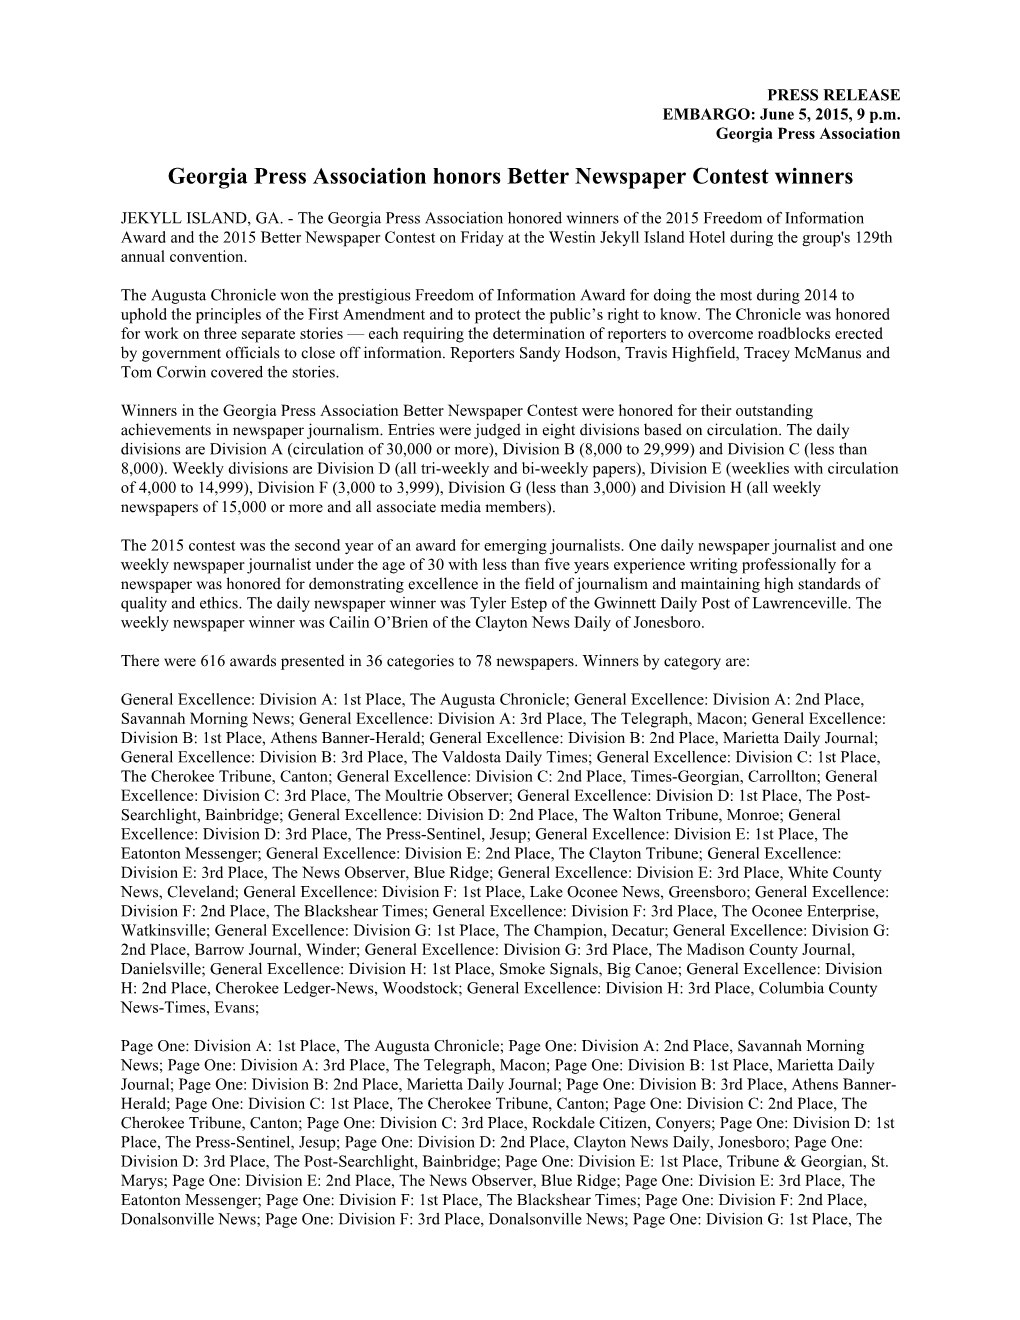 Georgia Press Association Honors Better Newspaper Contest Winners